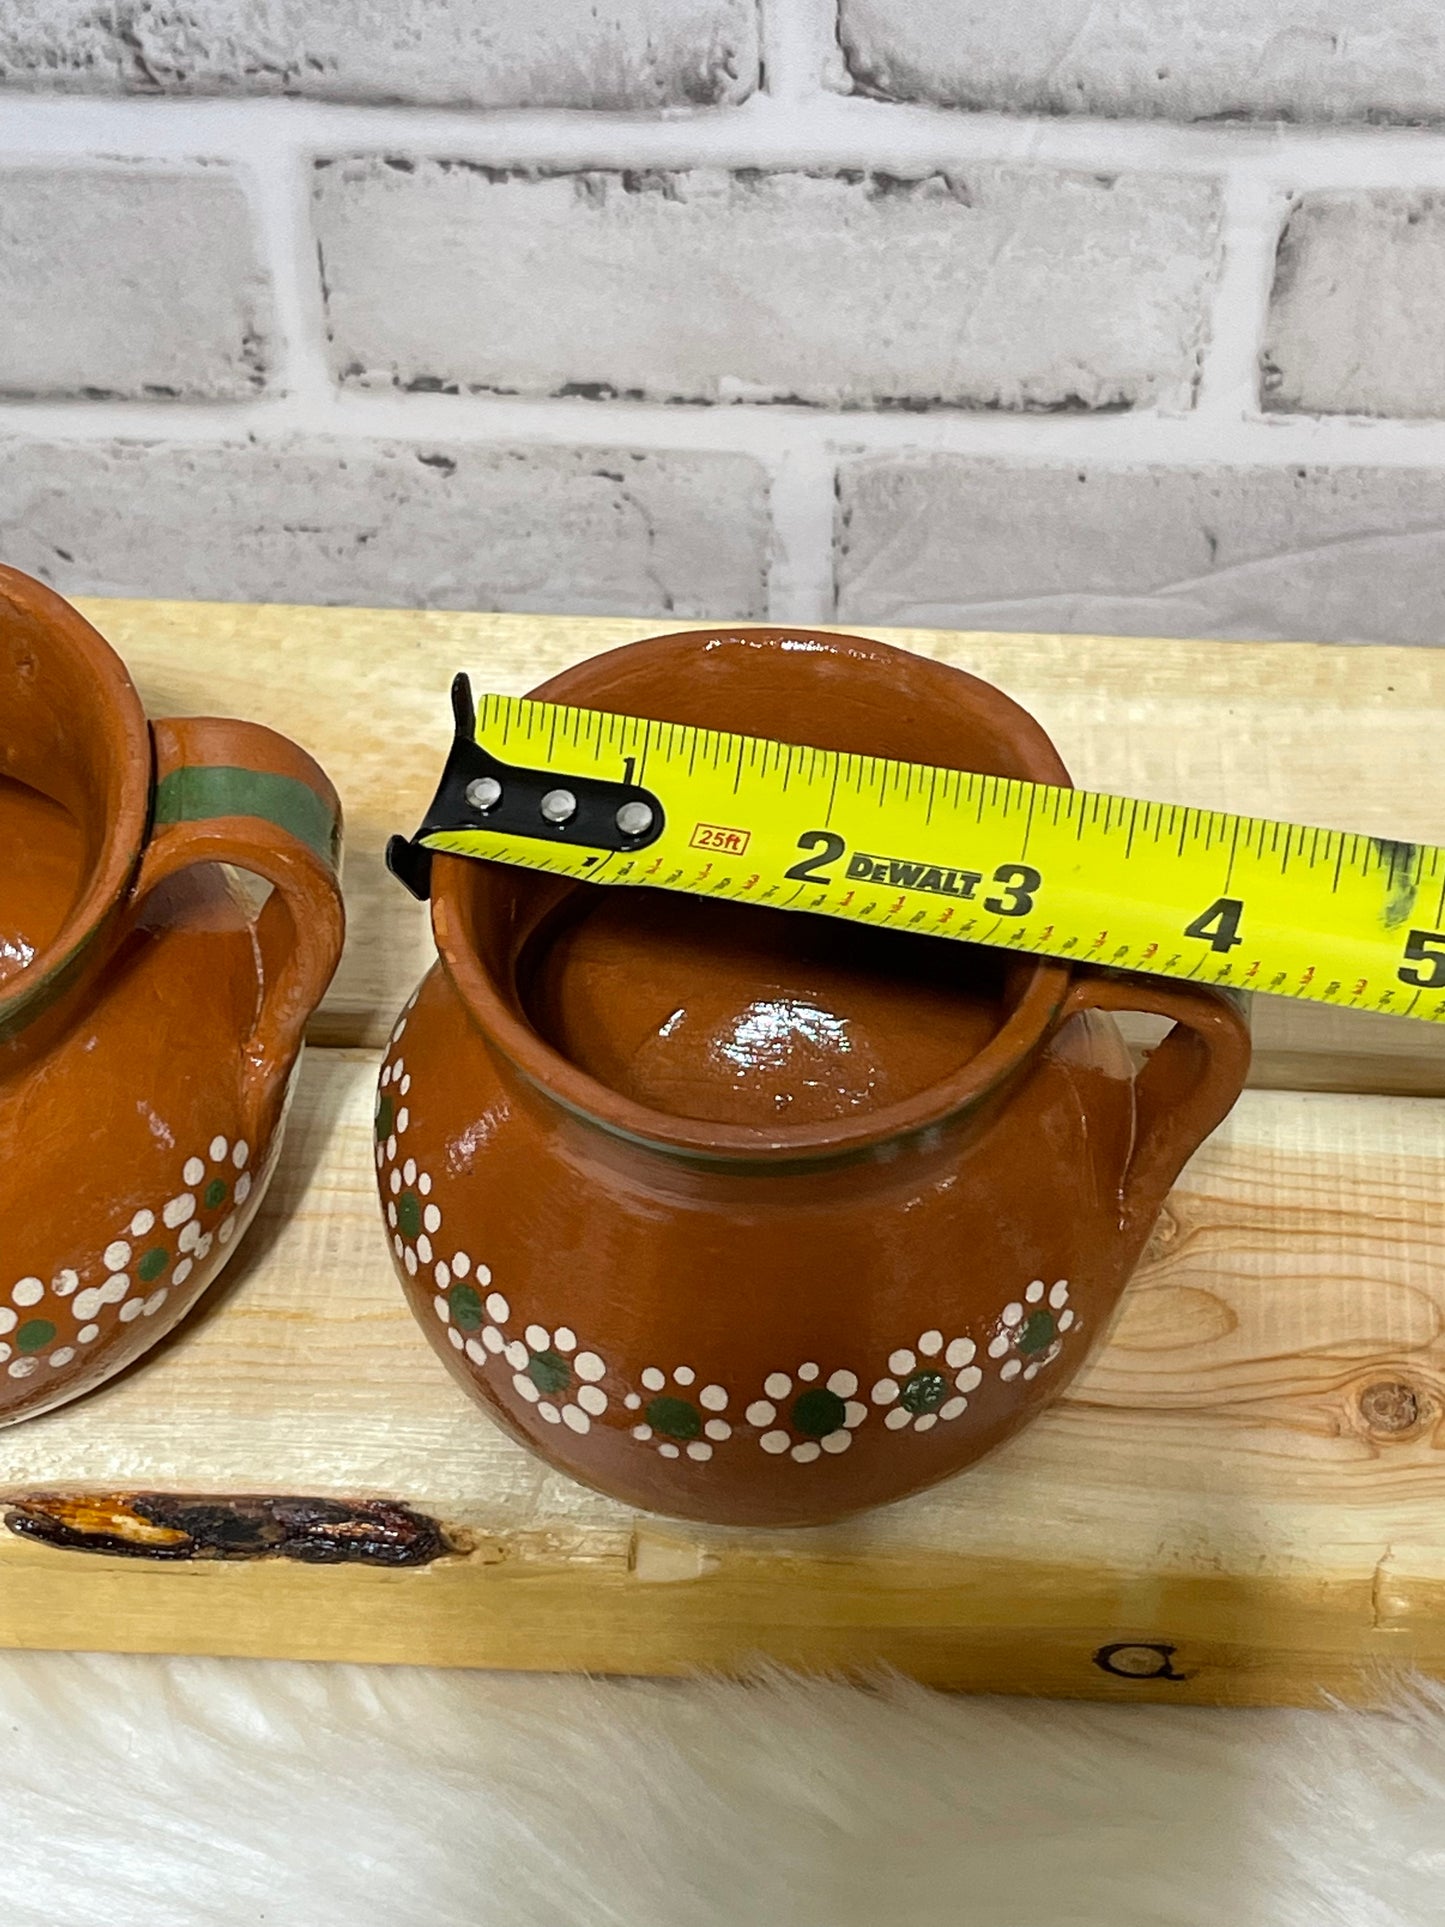 Mexican Handcrafted rustic coffee/tea 8pc set- set de barro para te o cafe